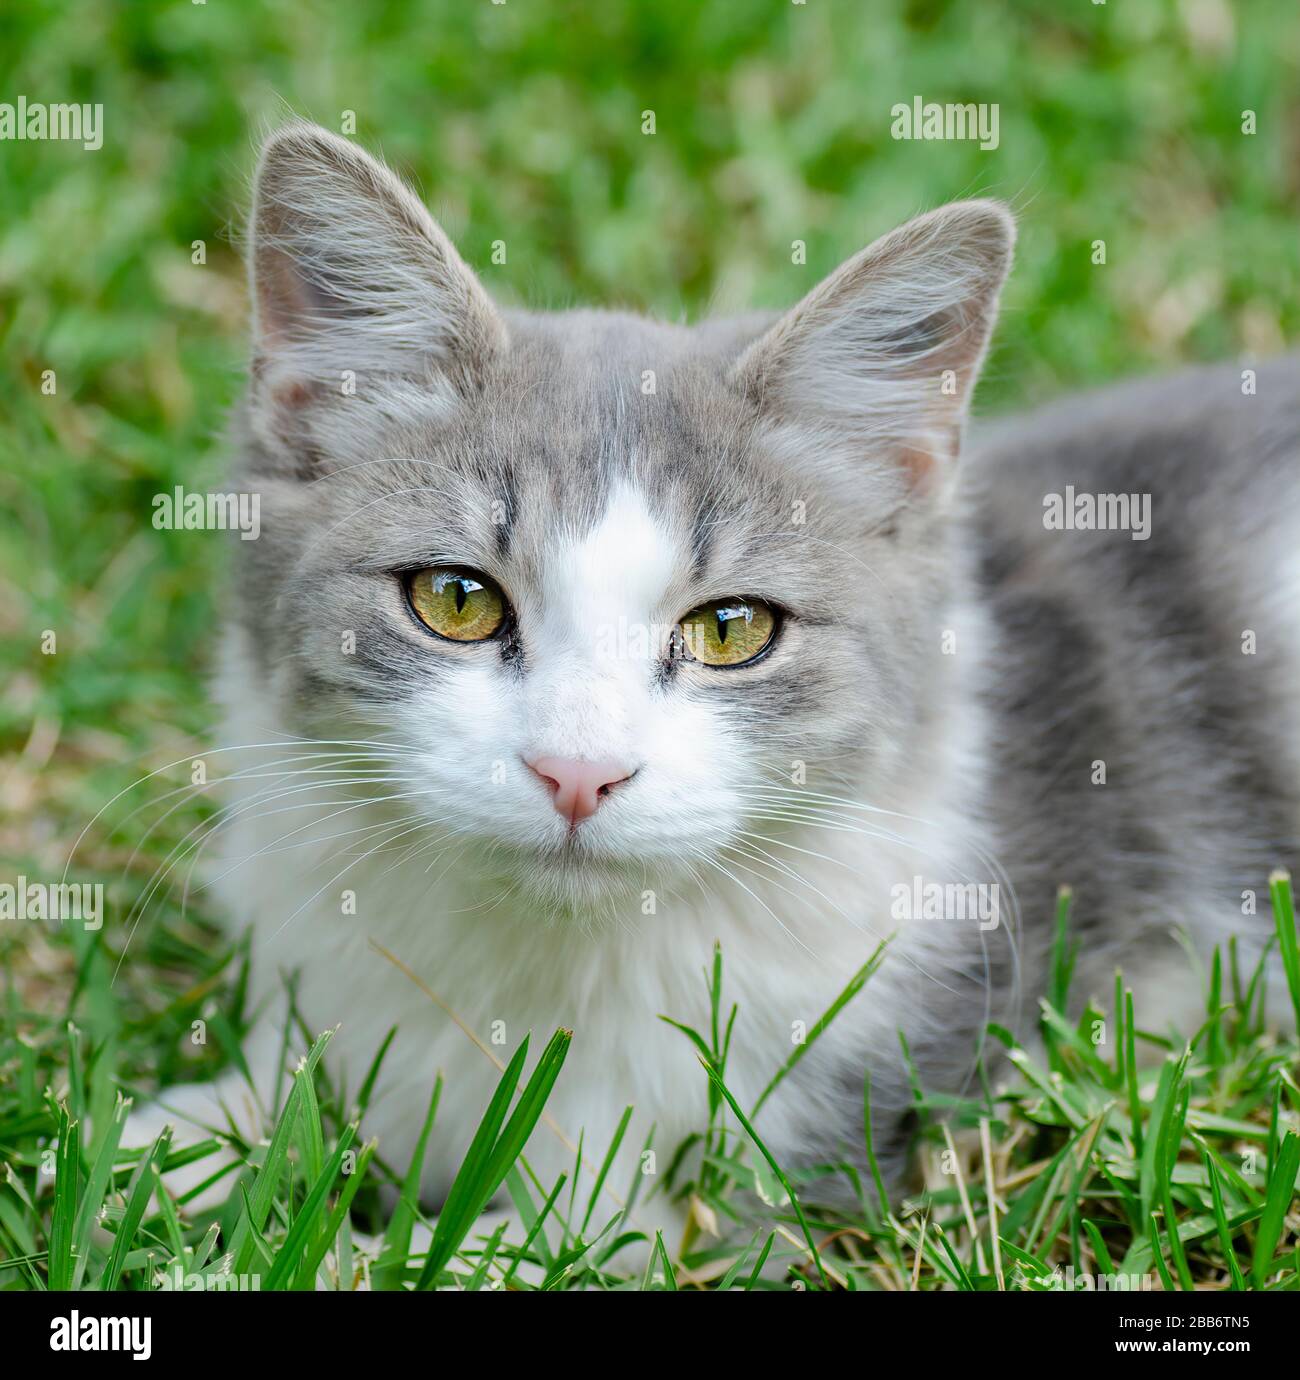 Fluffy cat sitting in the grass, Australia Stock Photo